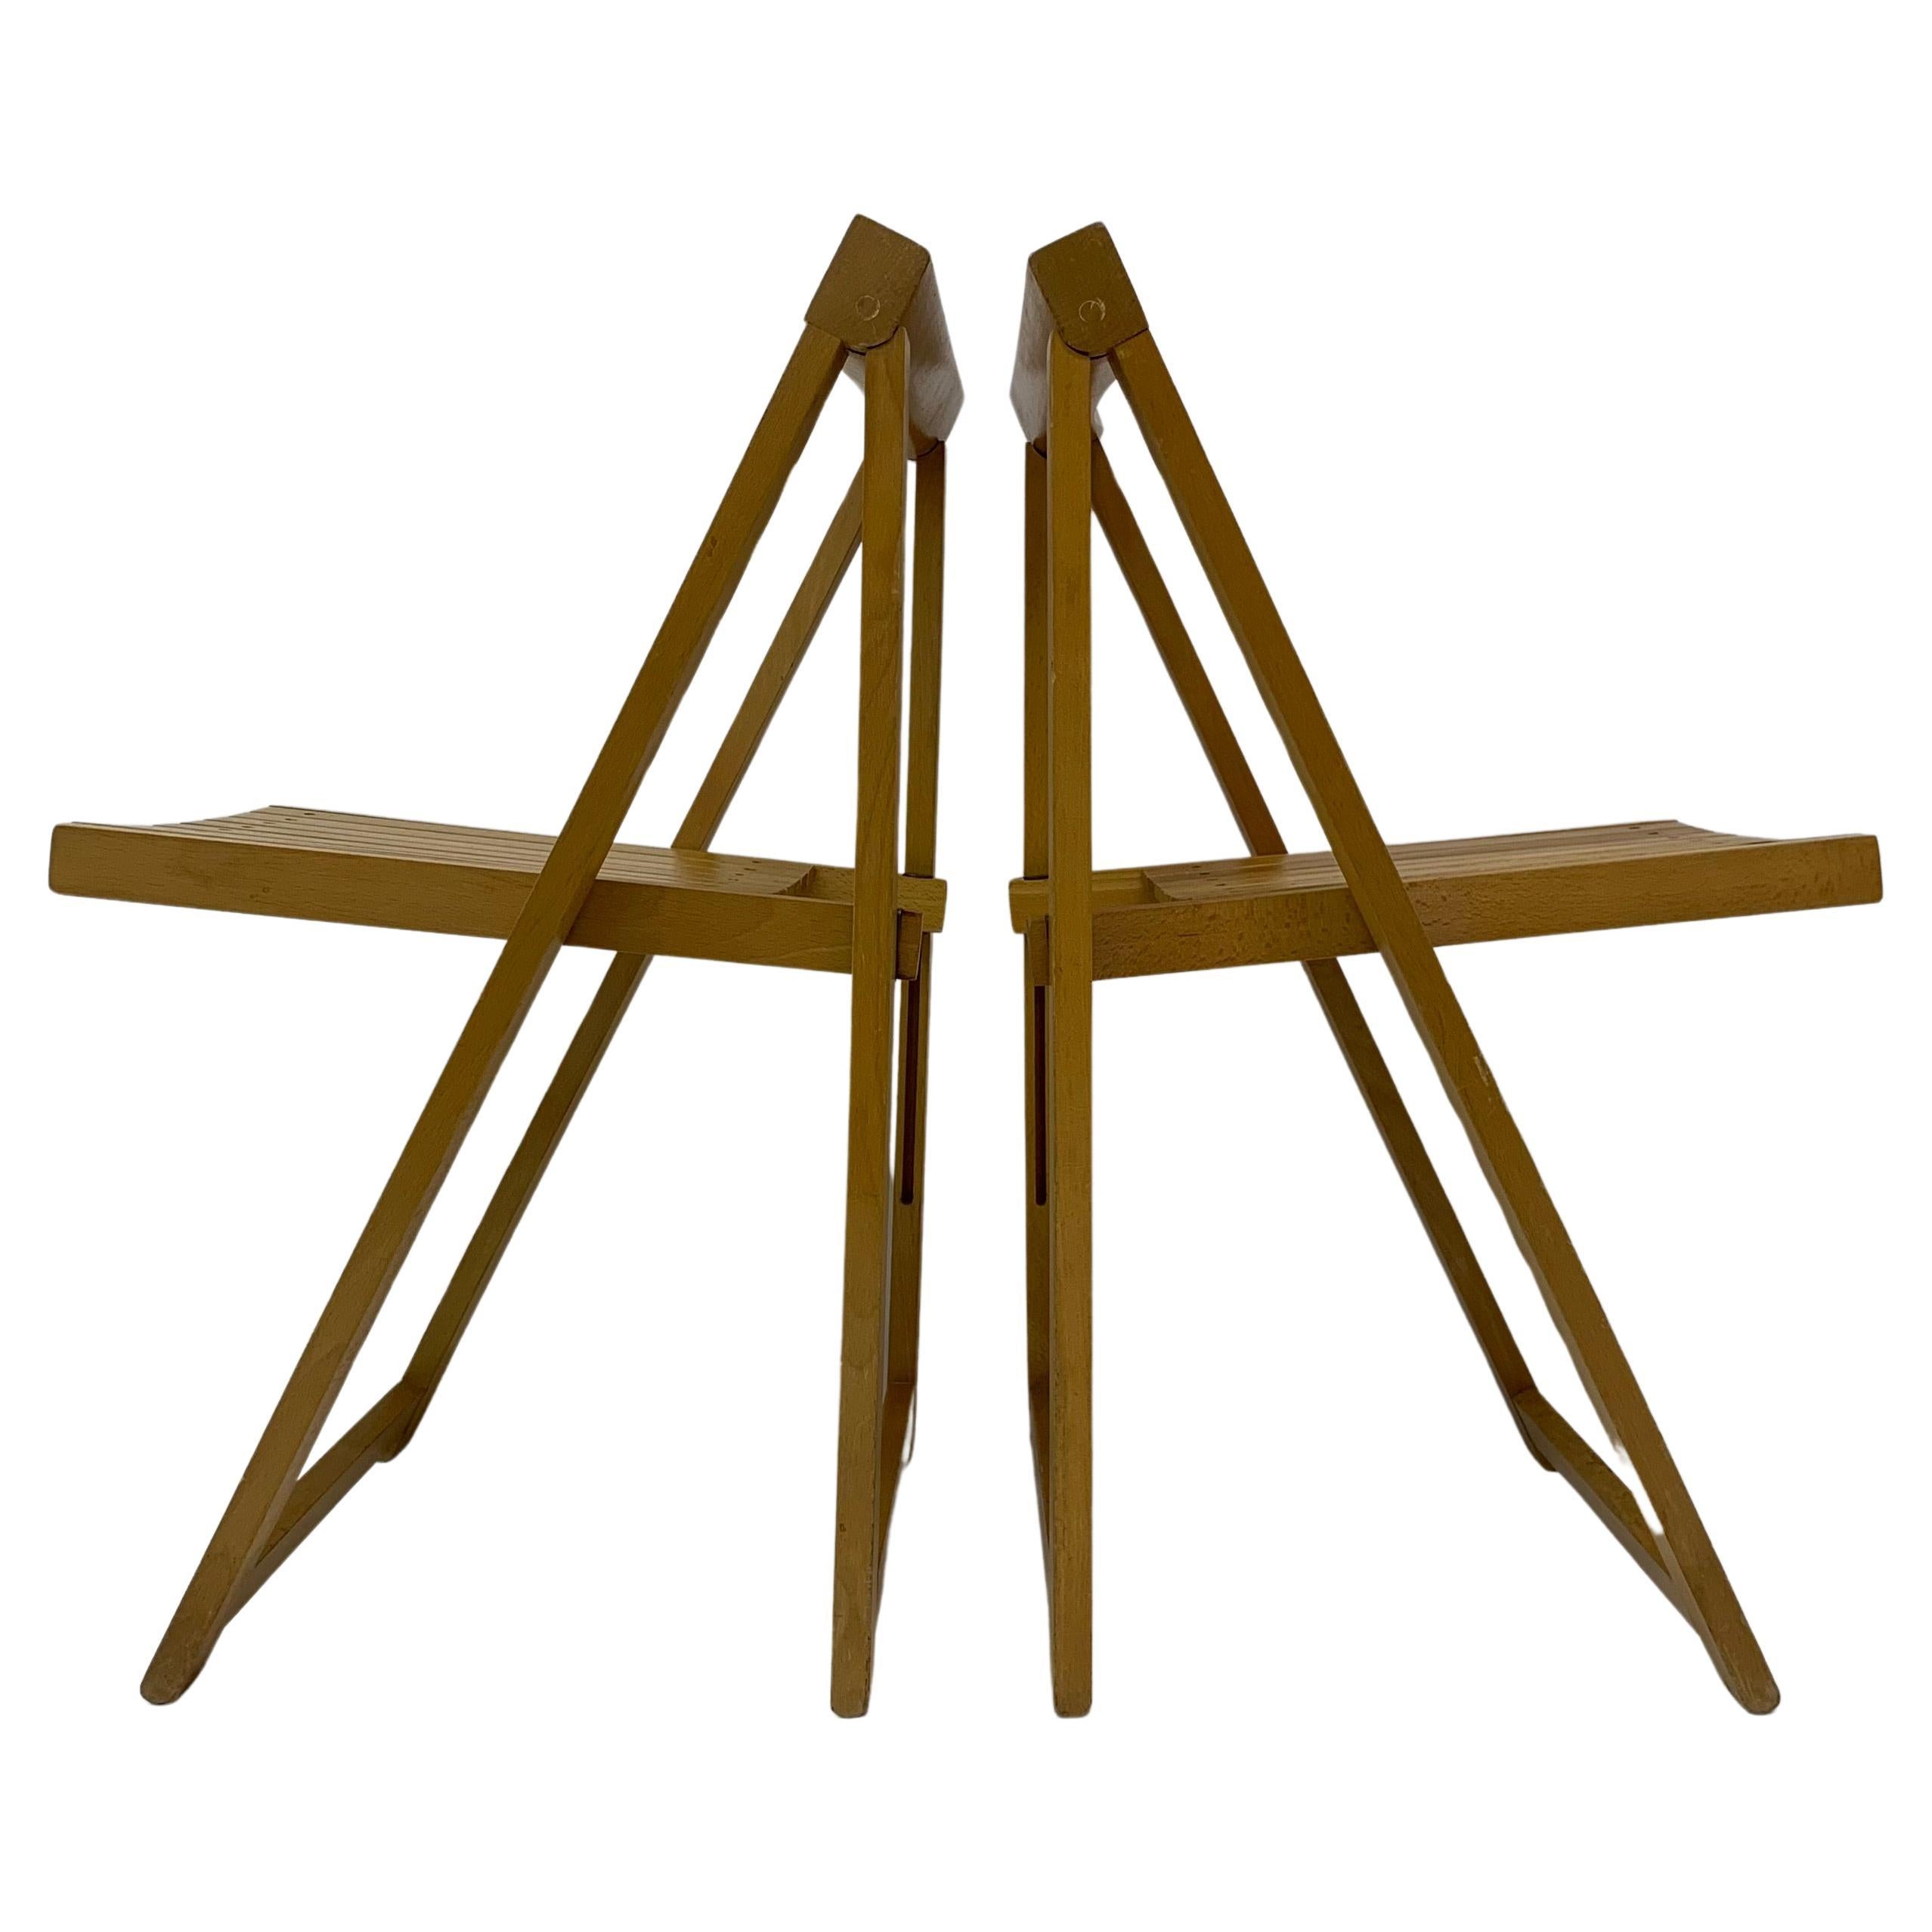 Set of 2 Aldo Jacober for Alberto Bazzani folding chairs, 1960’s